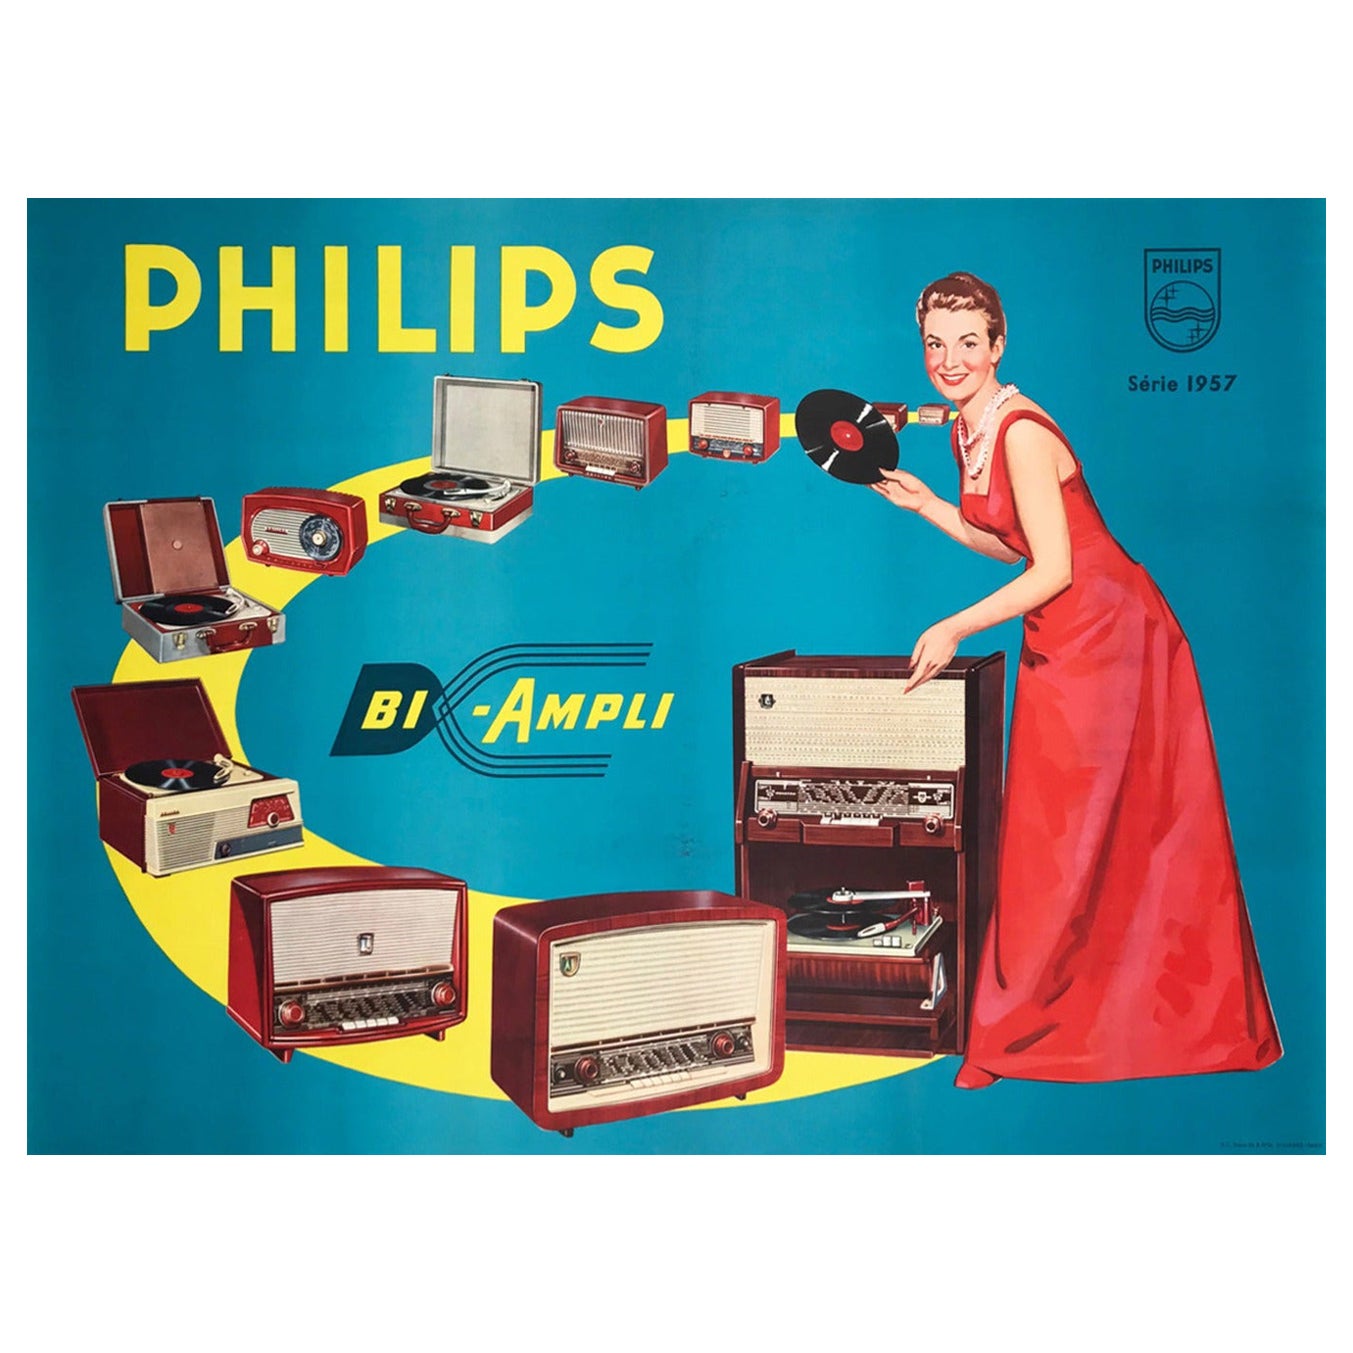 1957 Philips - Bi-Ampli Radio Original Vintage Poster For Sale